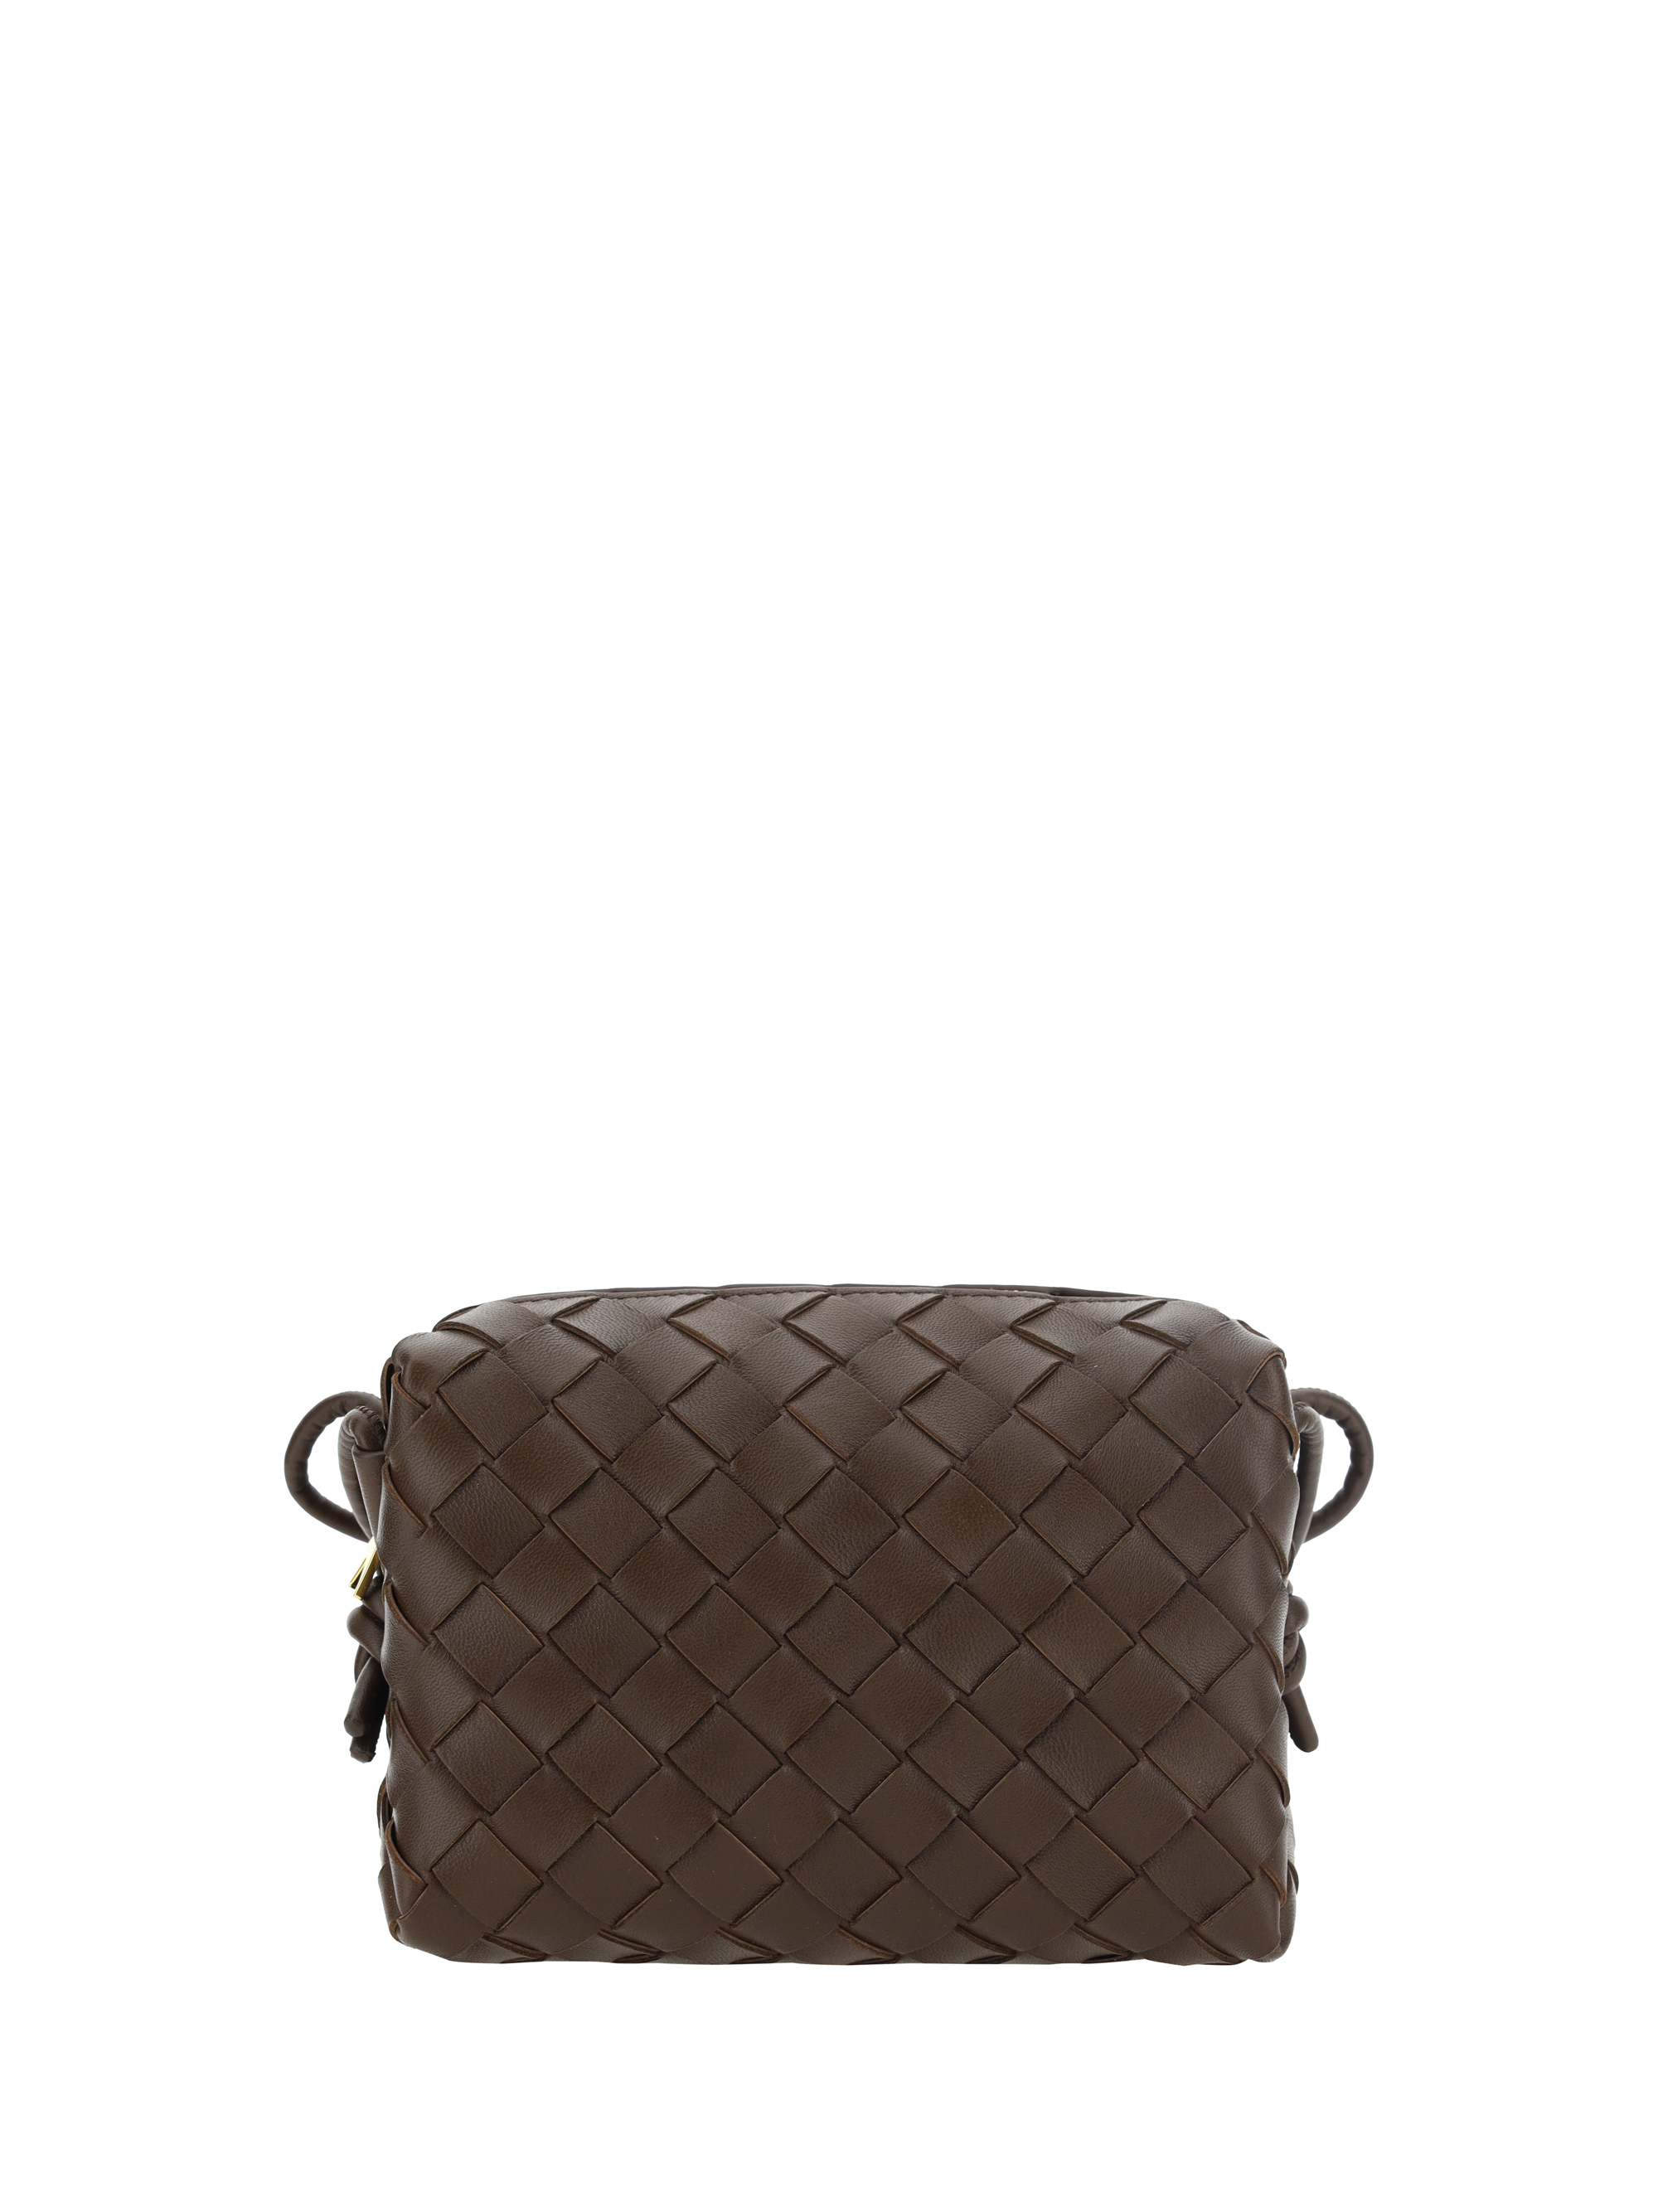 Bottega Veneta Mini Shoulder Bag In Light Brown/gold